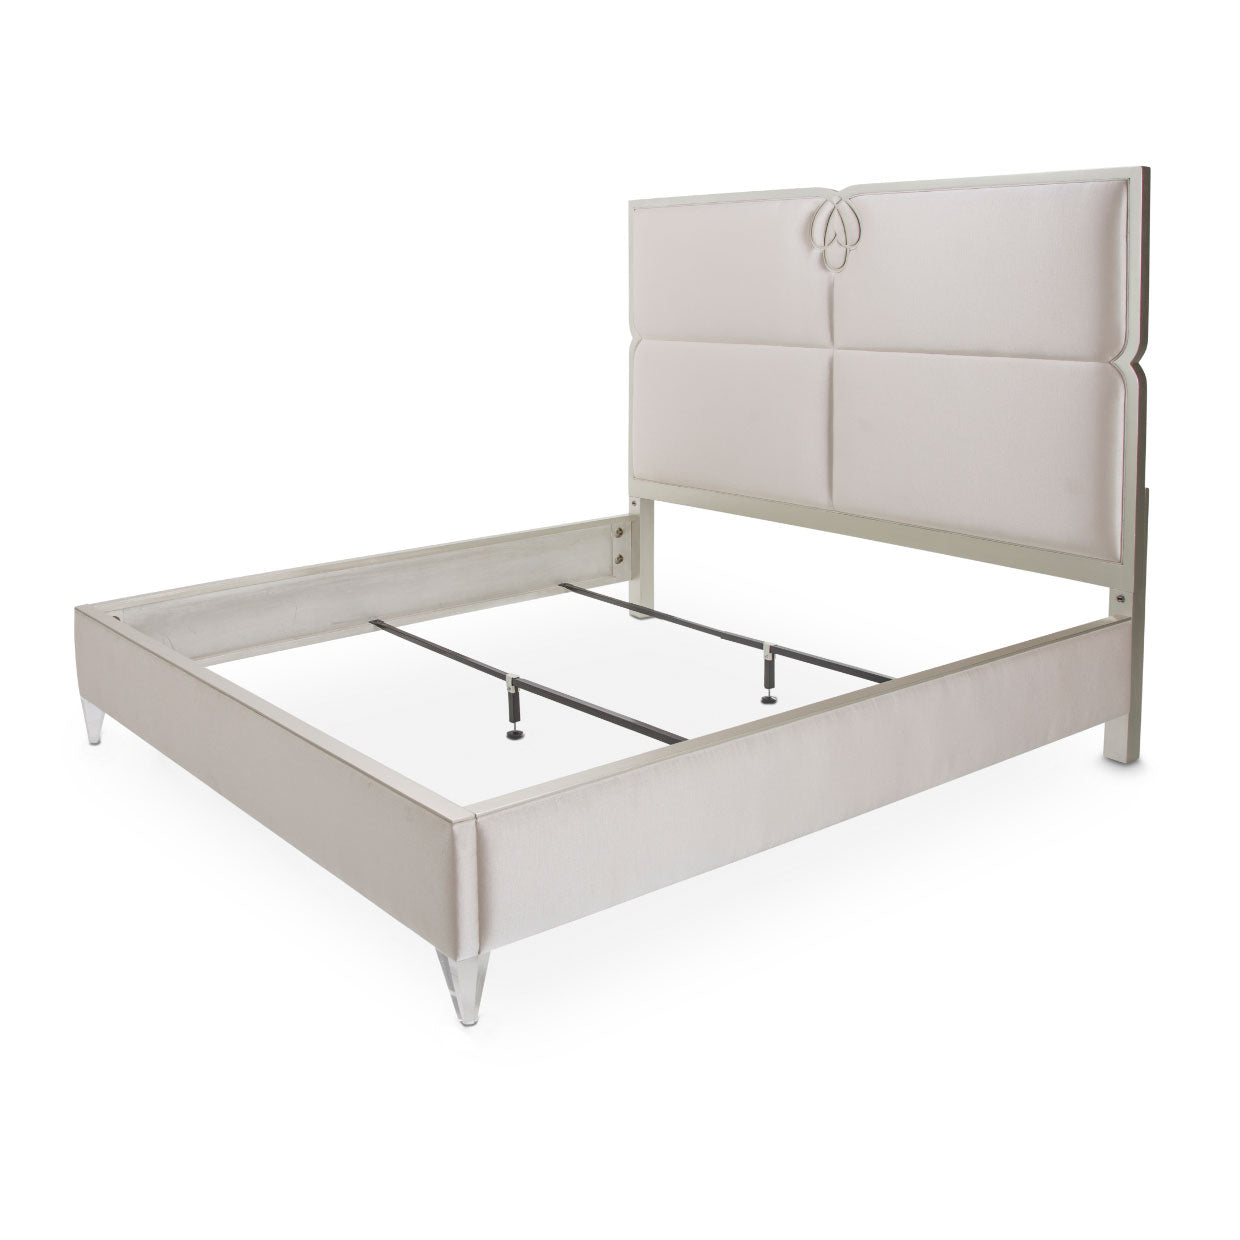 CAMDEN COURT Queen Upholstered Quad Panel Bed (3 Pc) - Dream art Gallery